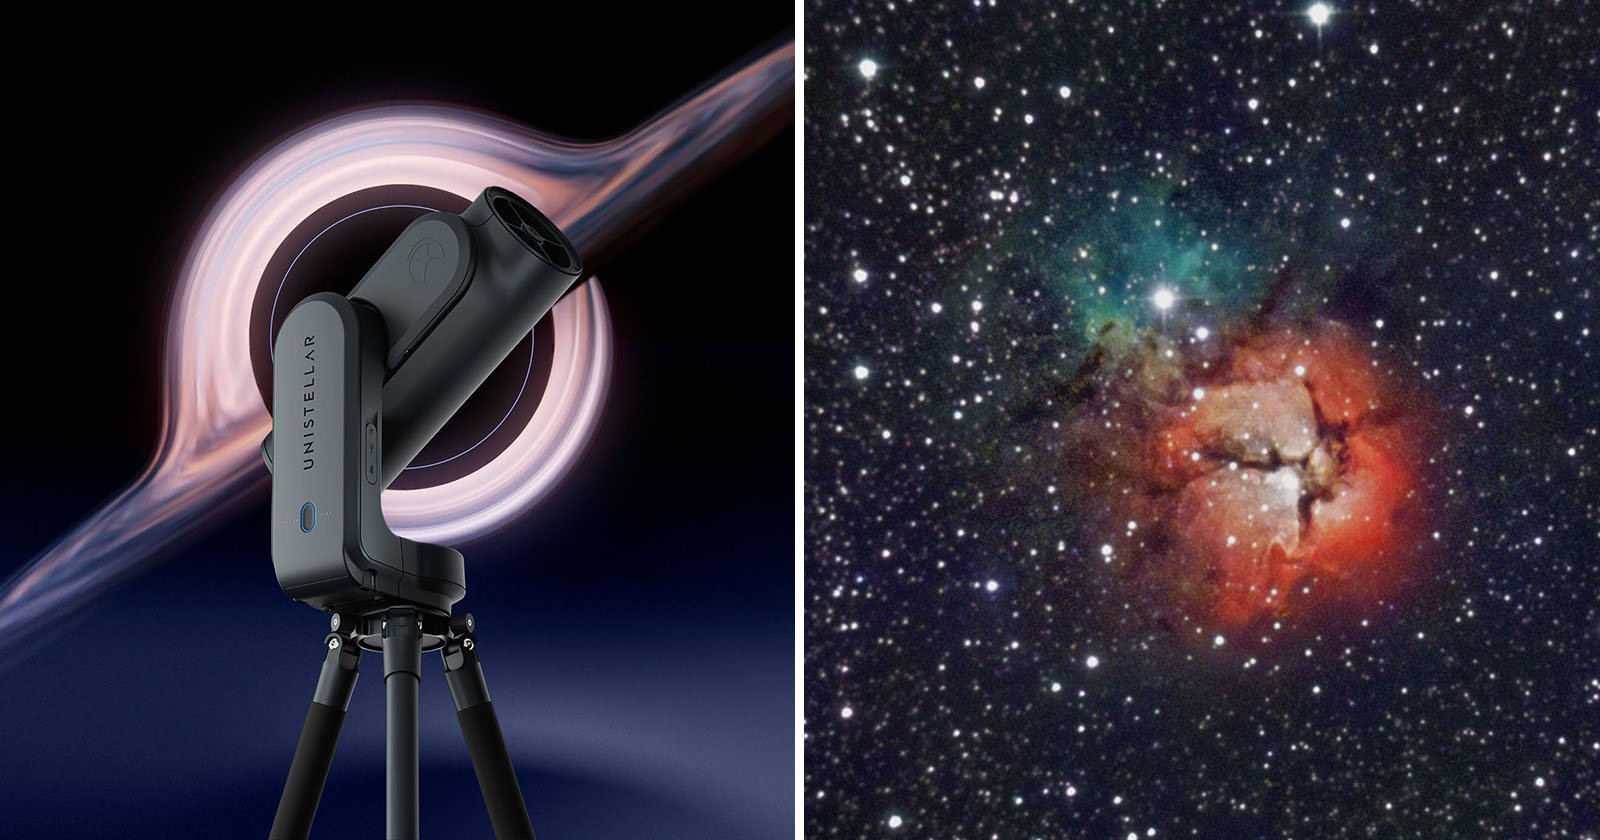  unistellar 000 odyssey pro smart telescope has 